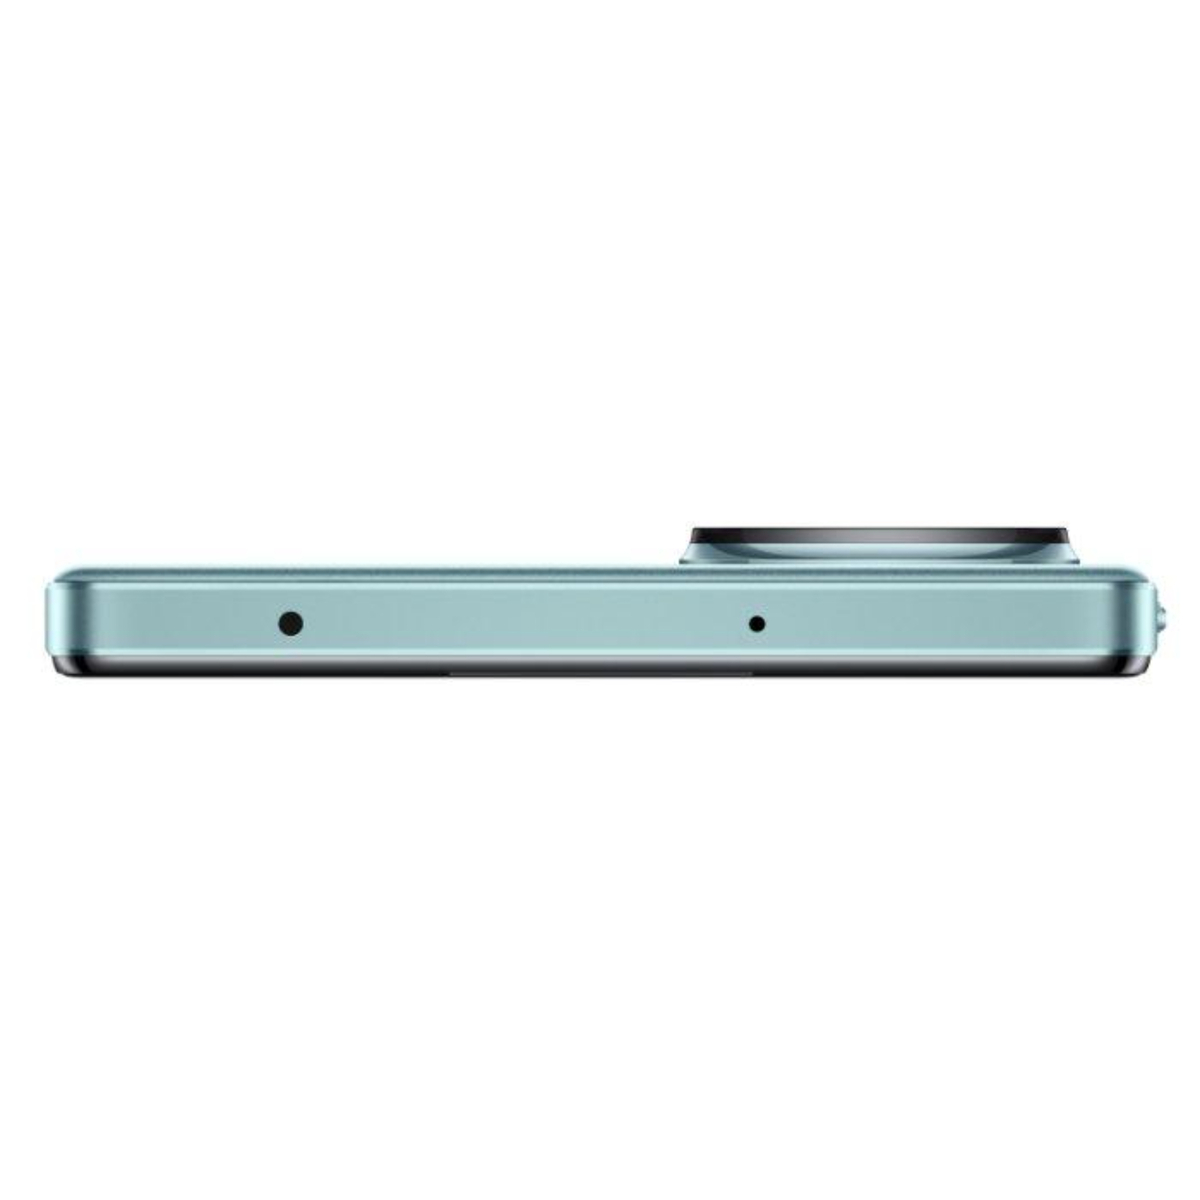 Honor X7b 5G Smartphone, 8 GB RAM, 256 GB Storage, Emerald Green